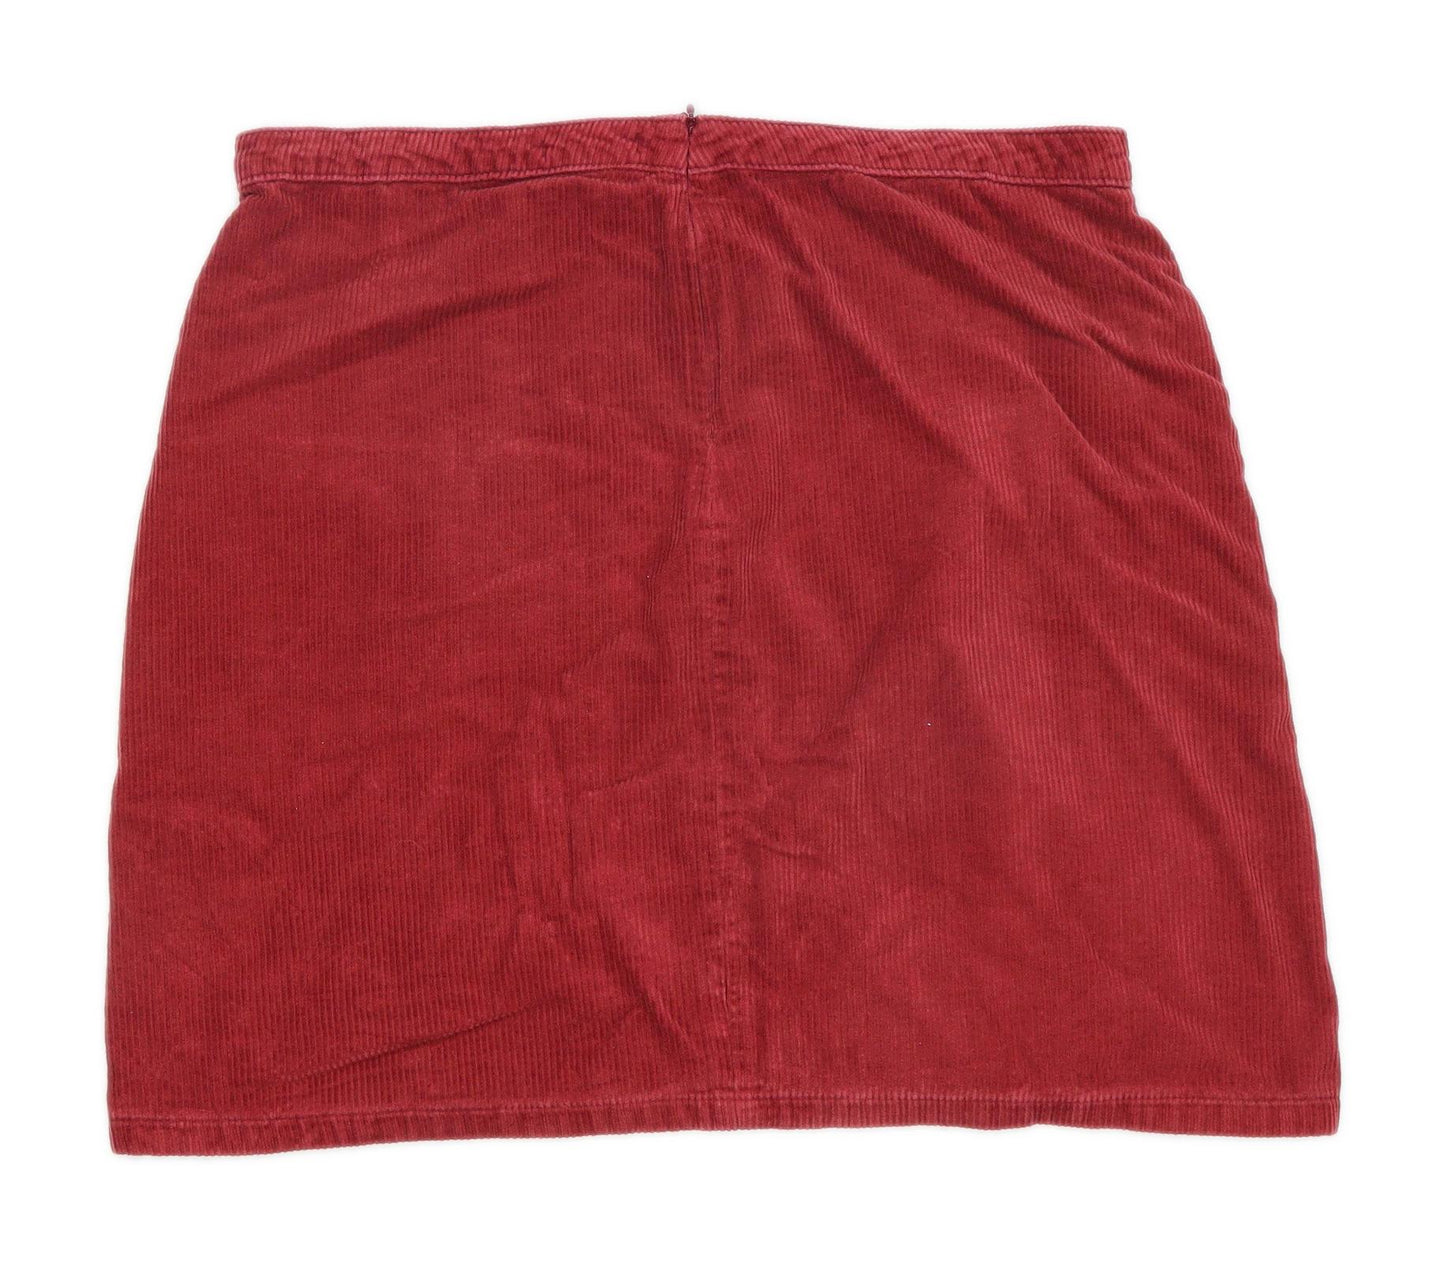 TU Womens Size 14 Corduroy Red Skirt (Regular)